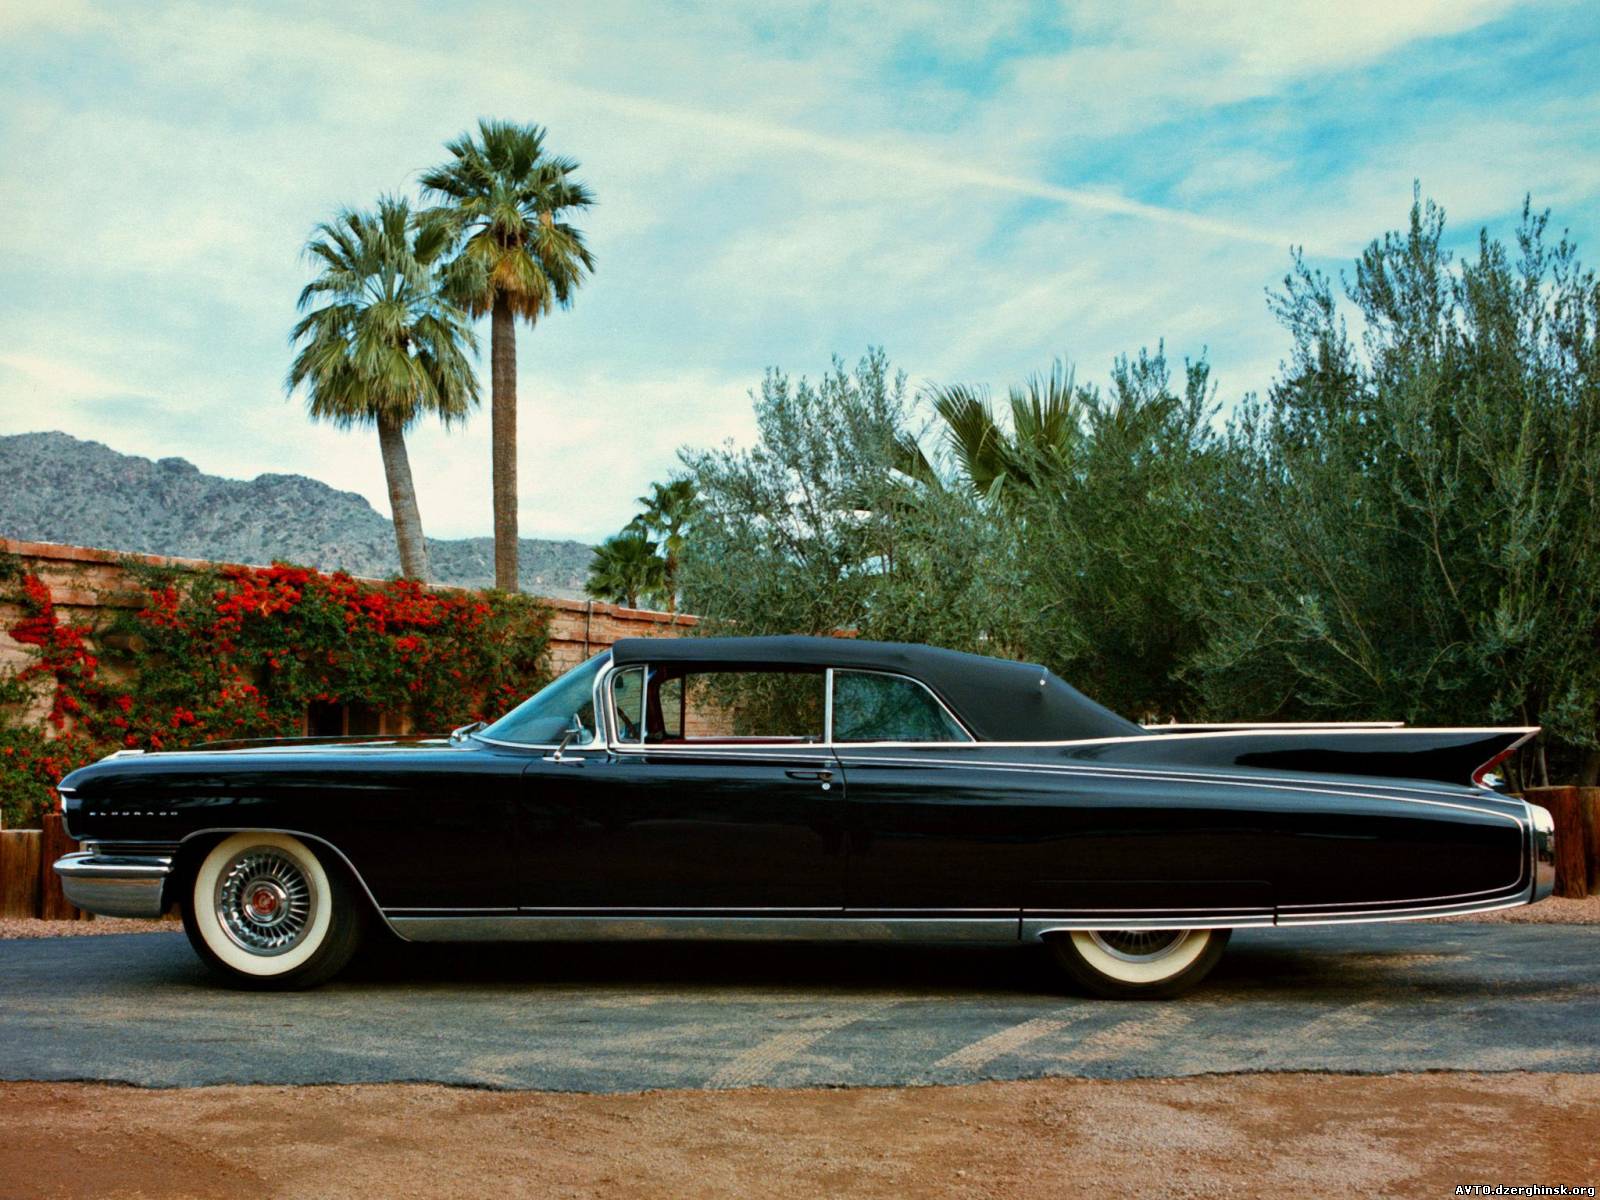 042. 1960 Cadillac Eldorado Biarritz